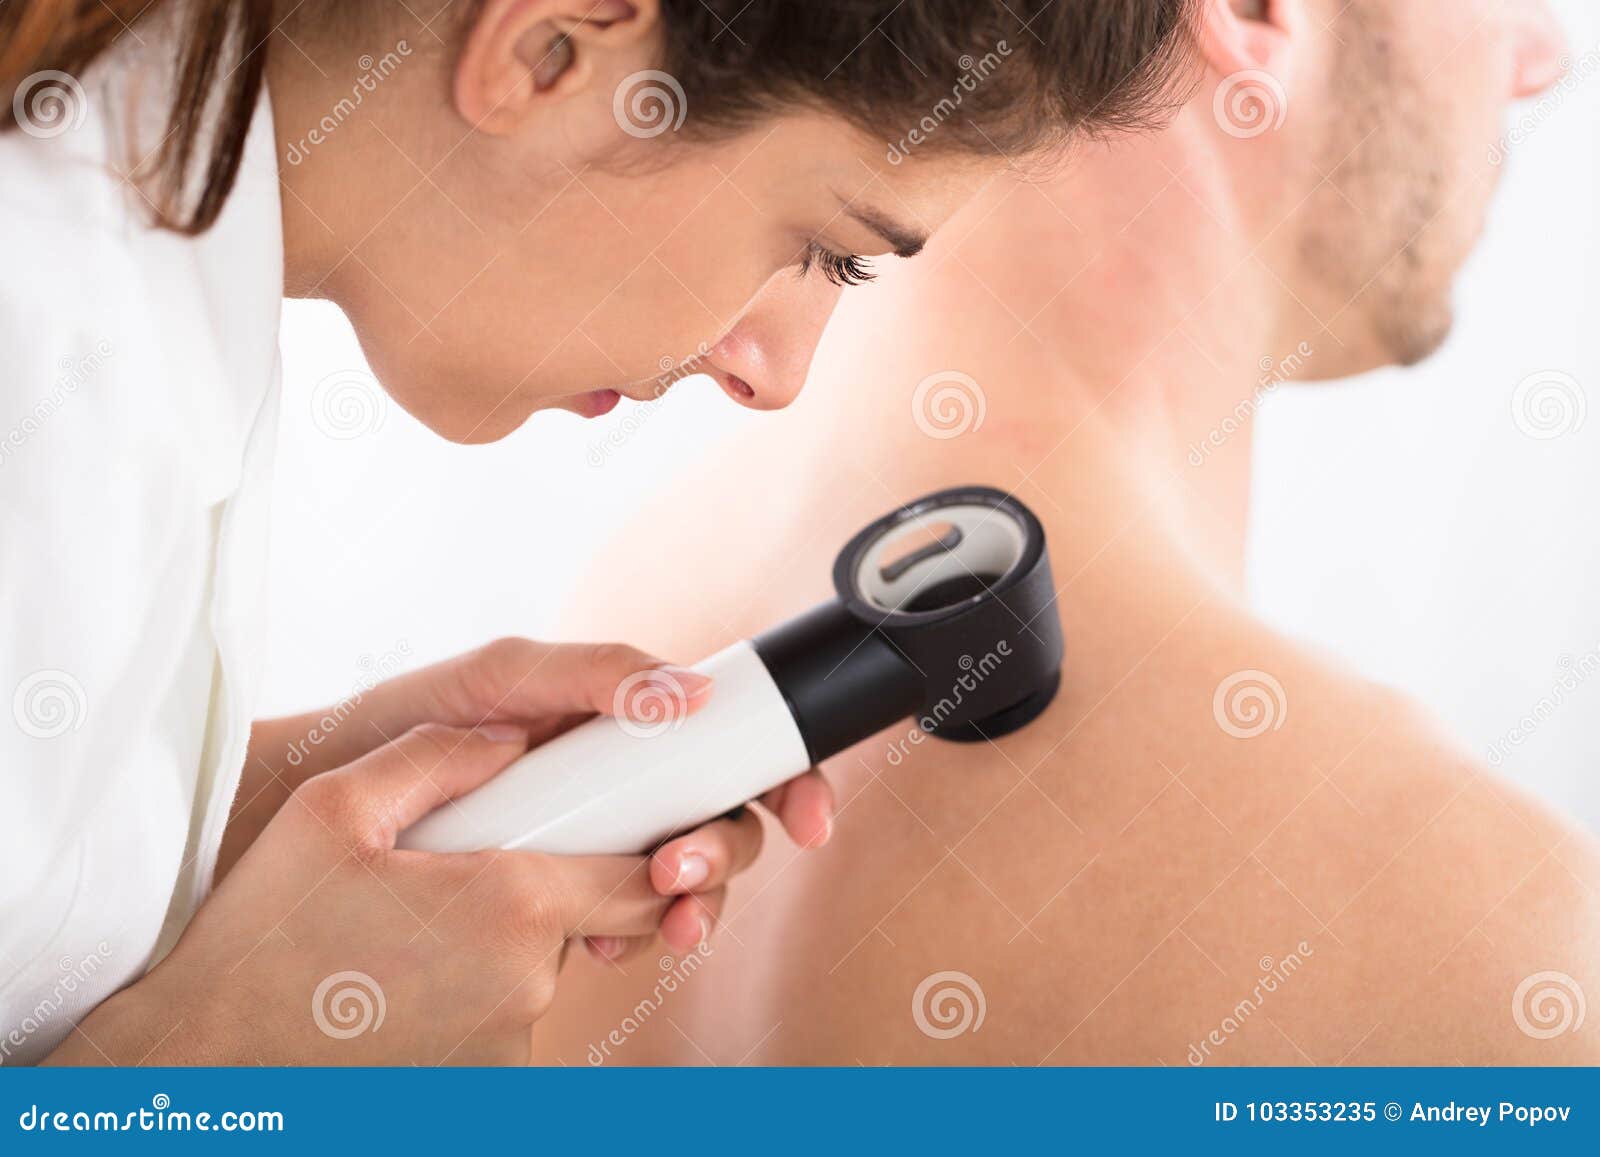 doctor using dermatoscope for skin examination